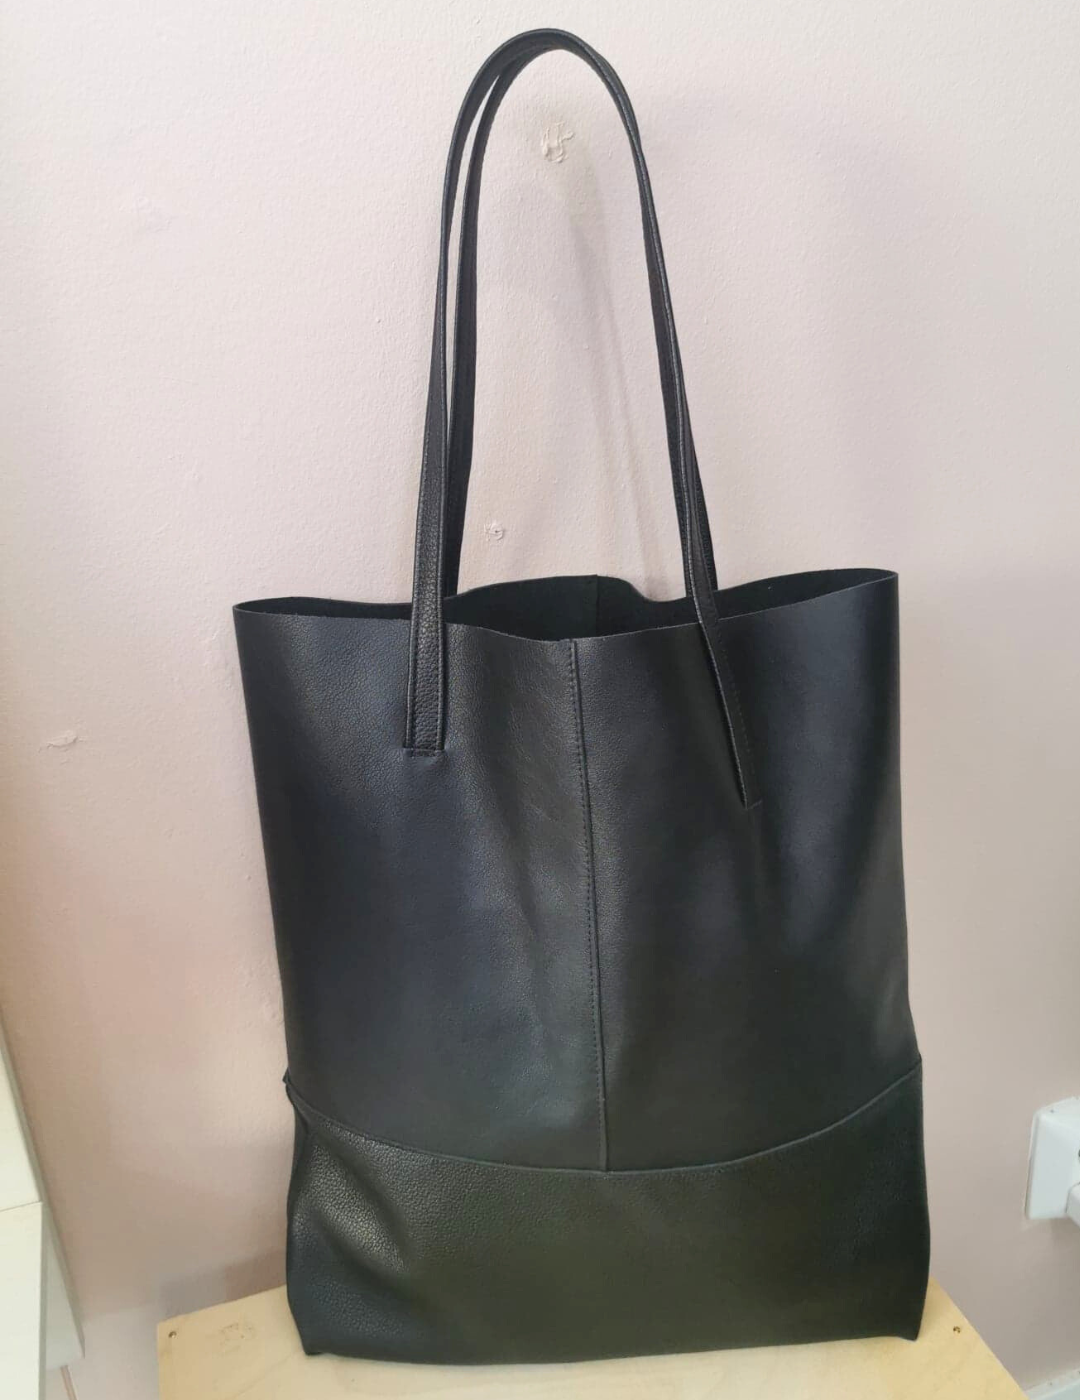 Simply Fab bag, musta nahka